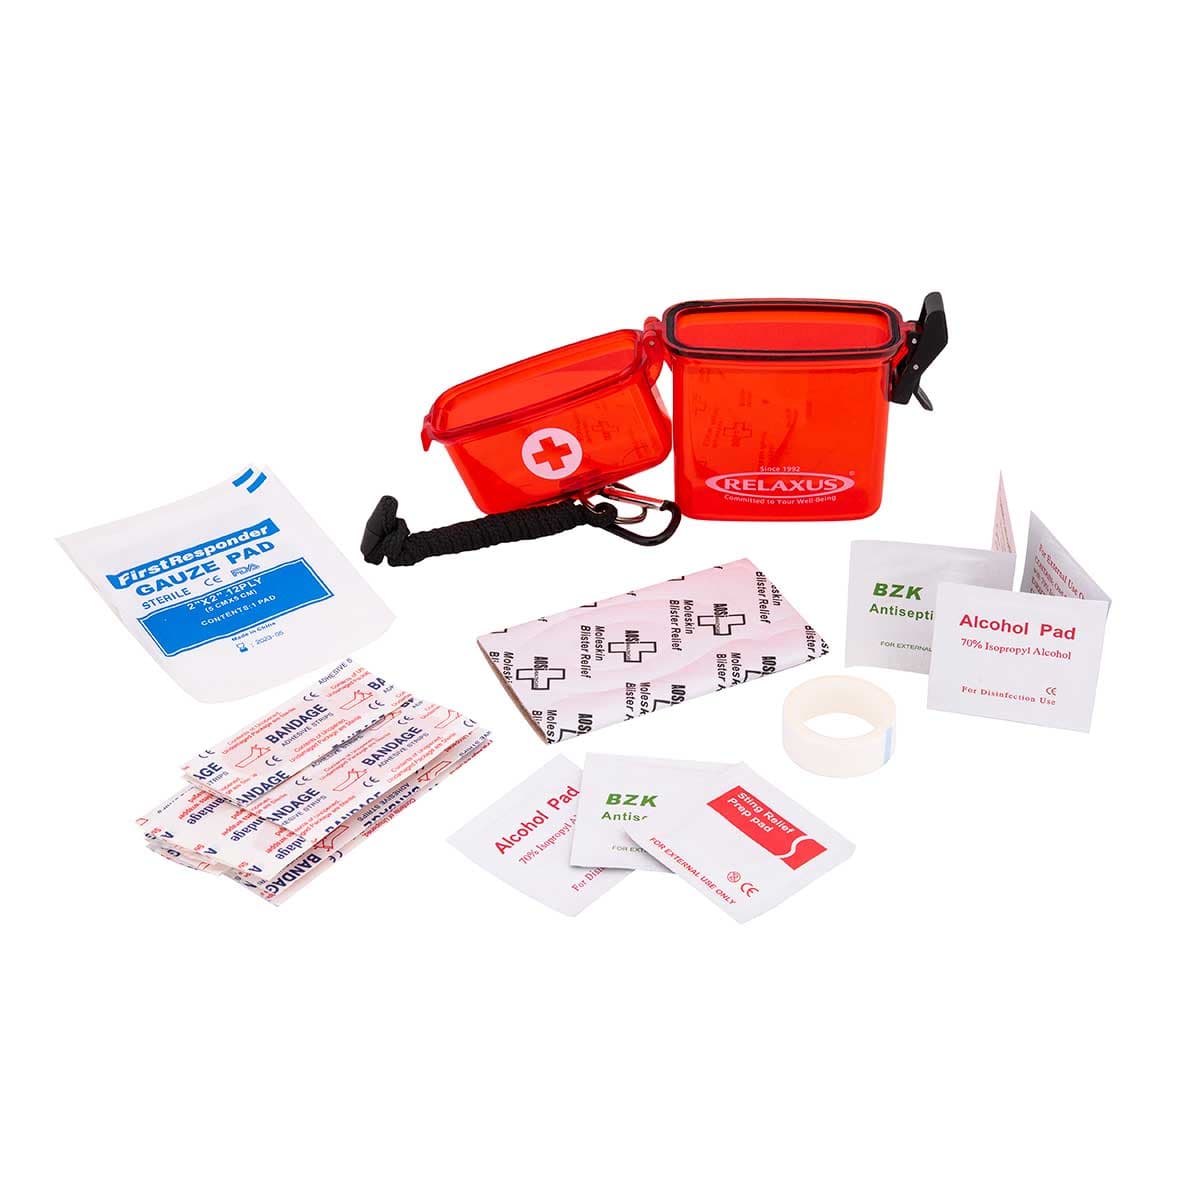 Wholesale Waterproof First Aid Kit